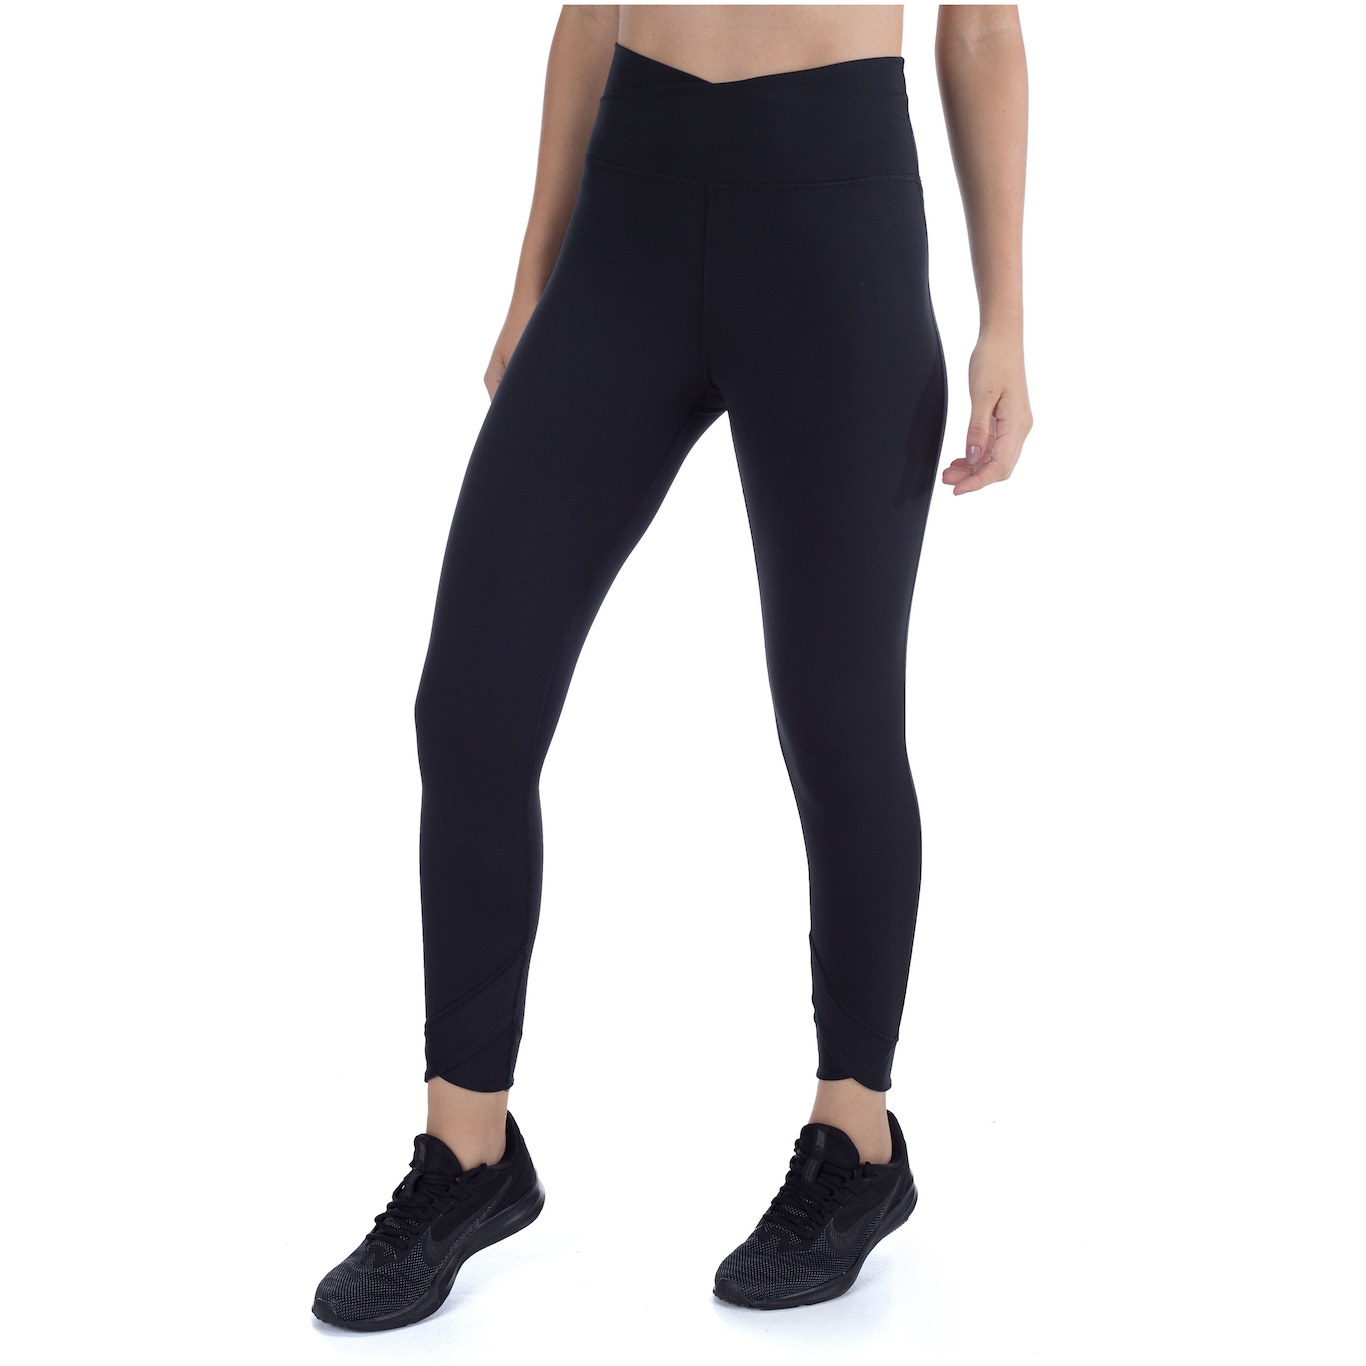 Calça Legging Nike Yoga Wrap 7/8 Tight Feminina CJ4215-010 - Ativa Esportes